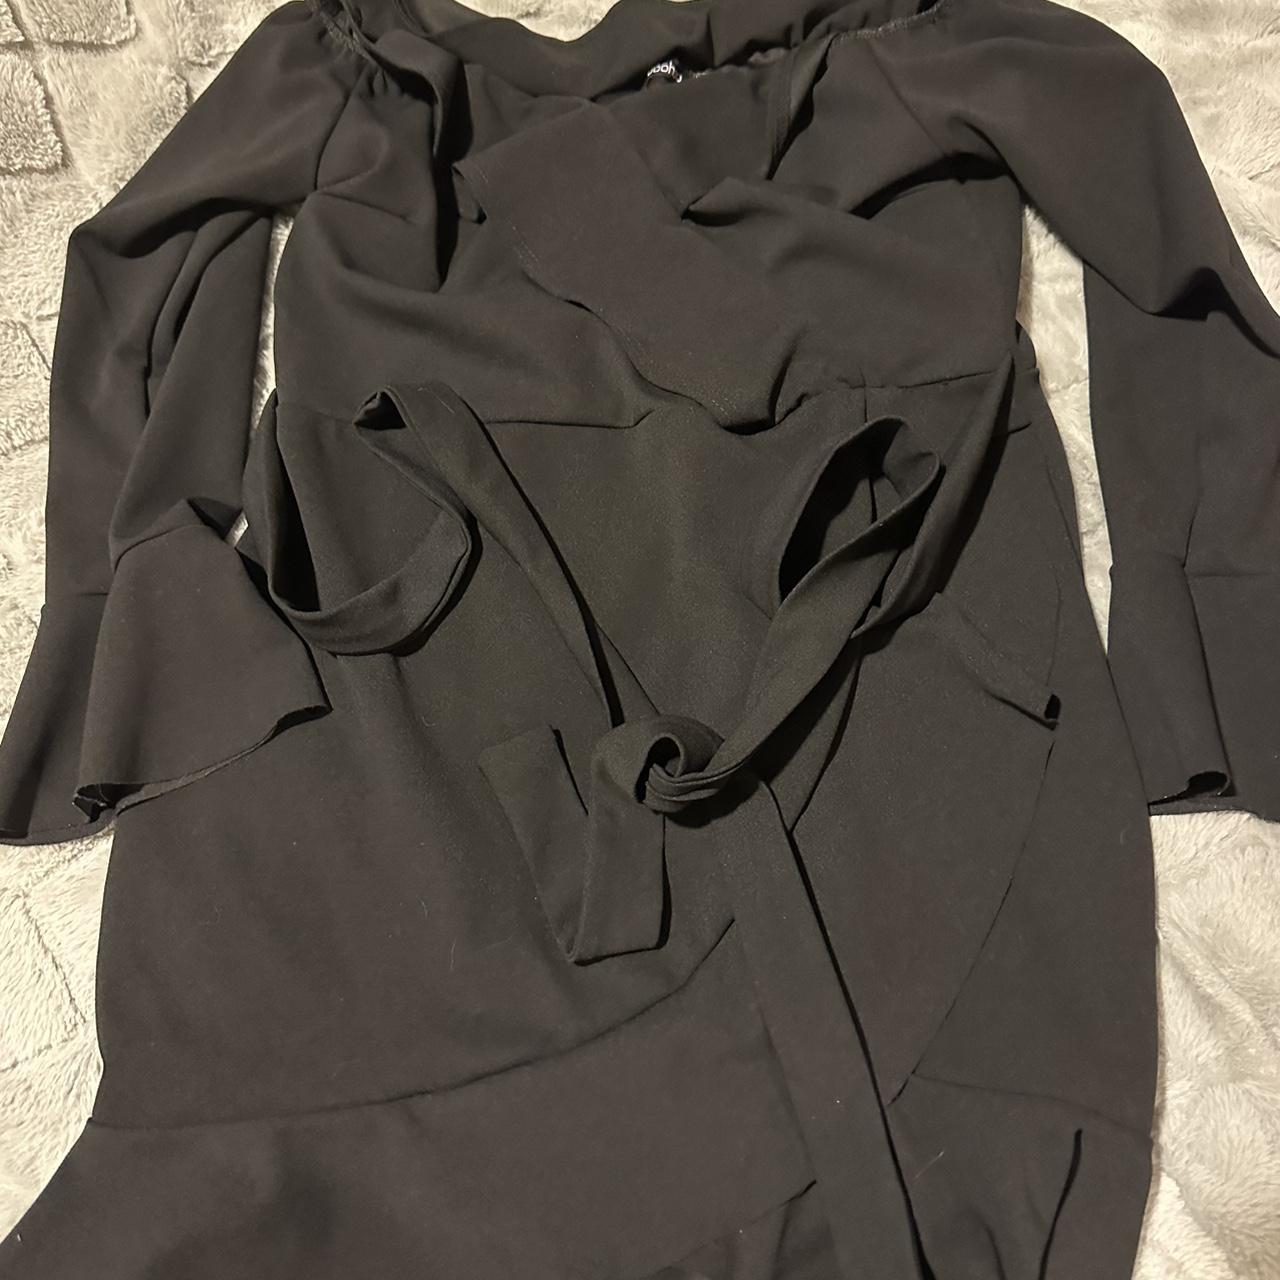 black dress size 16/18 comfy stretchy #blackdress - Depop